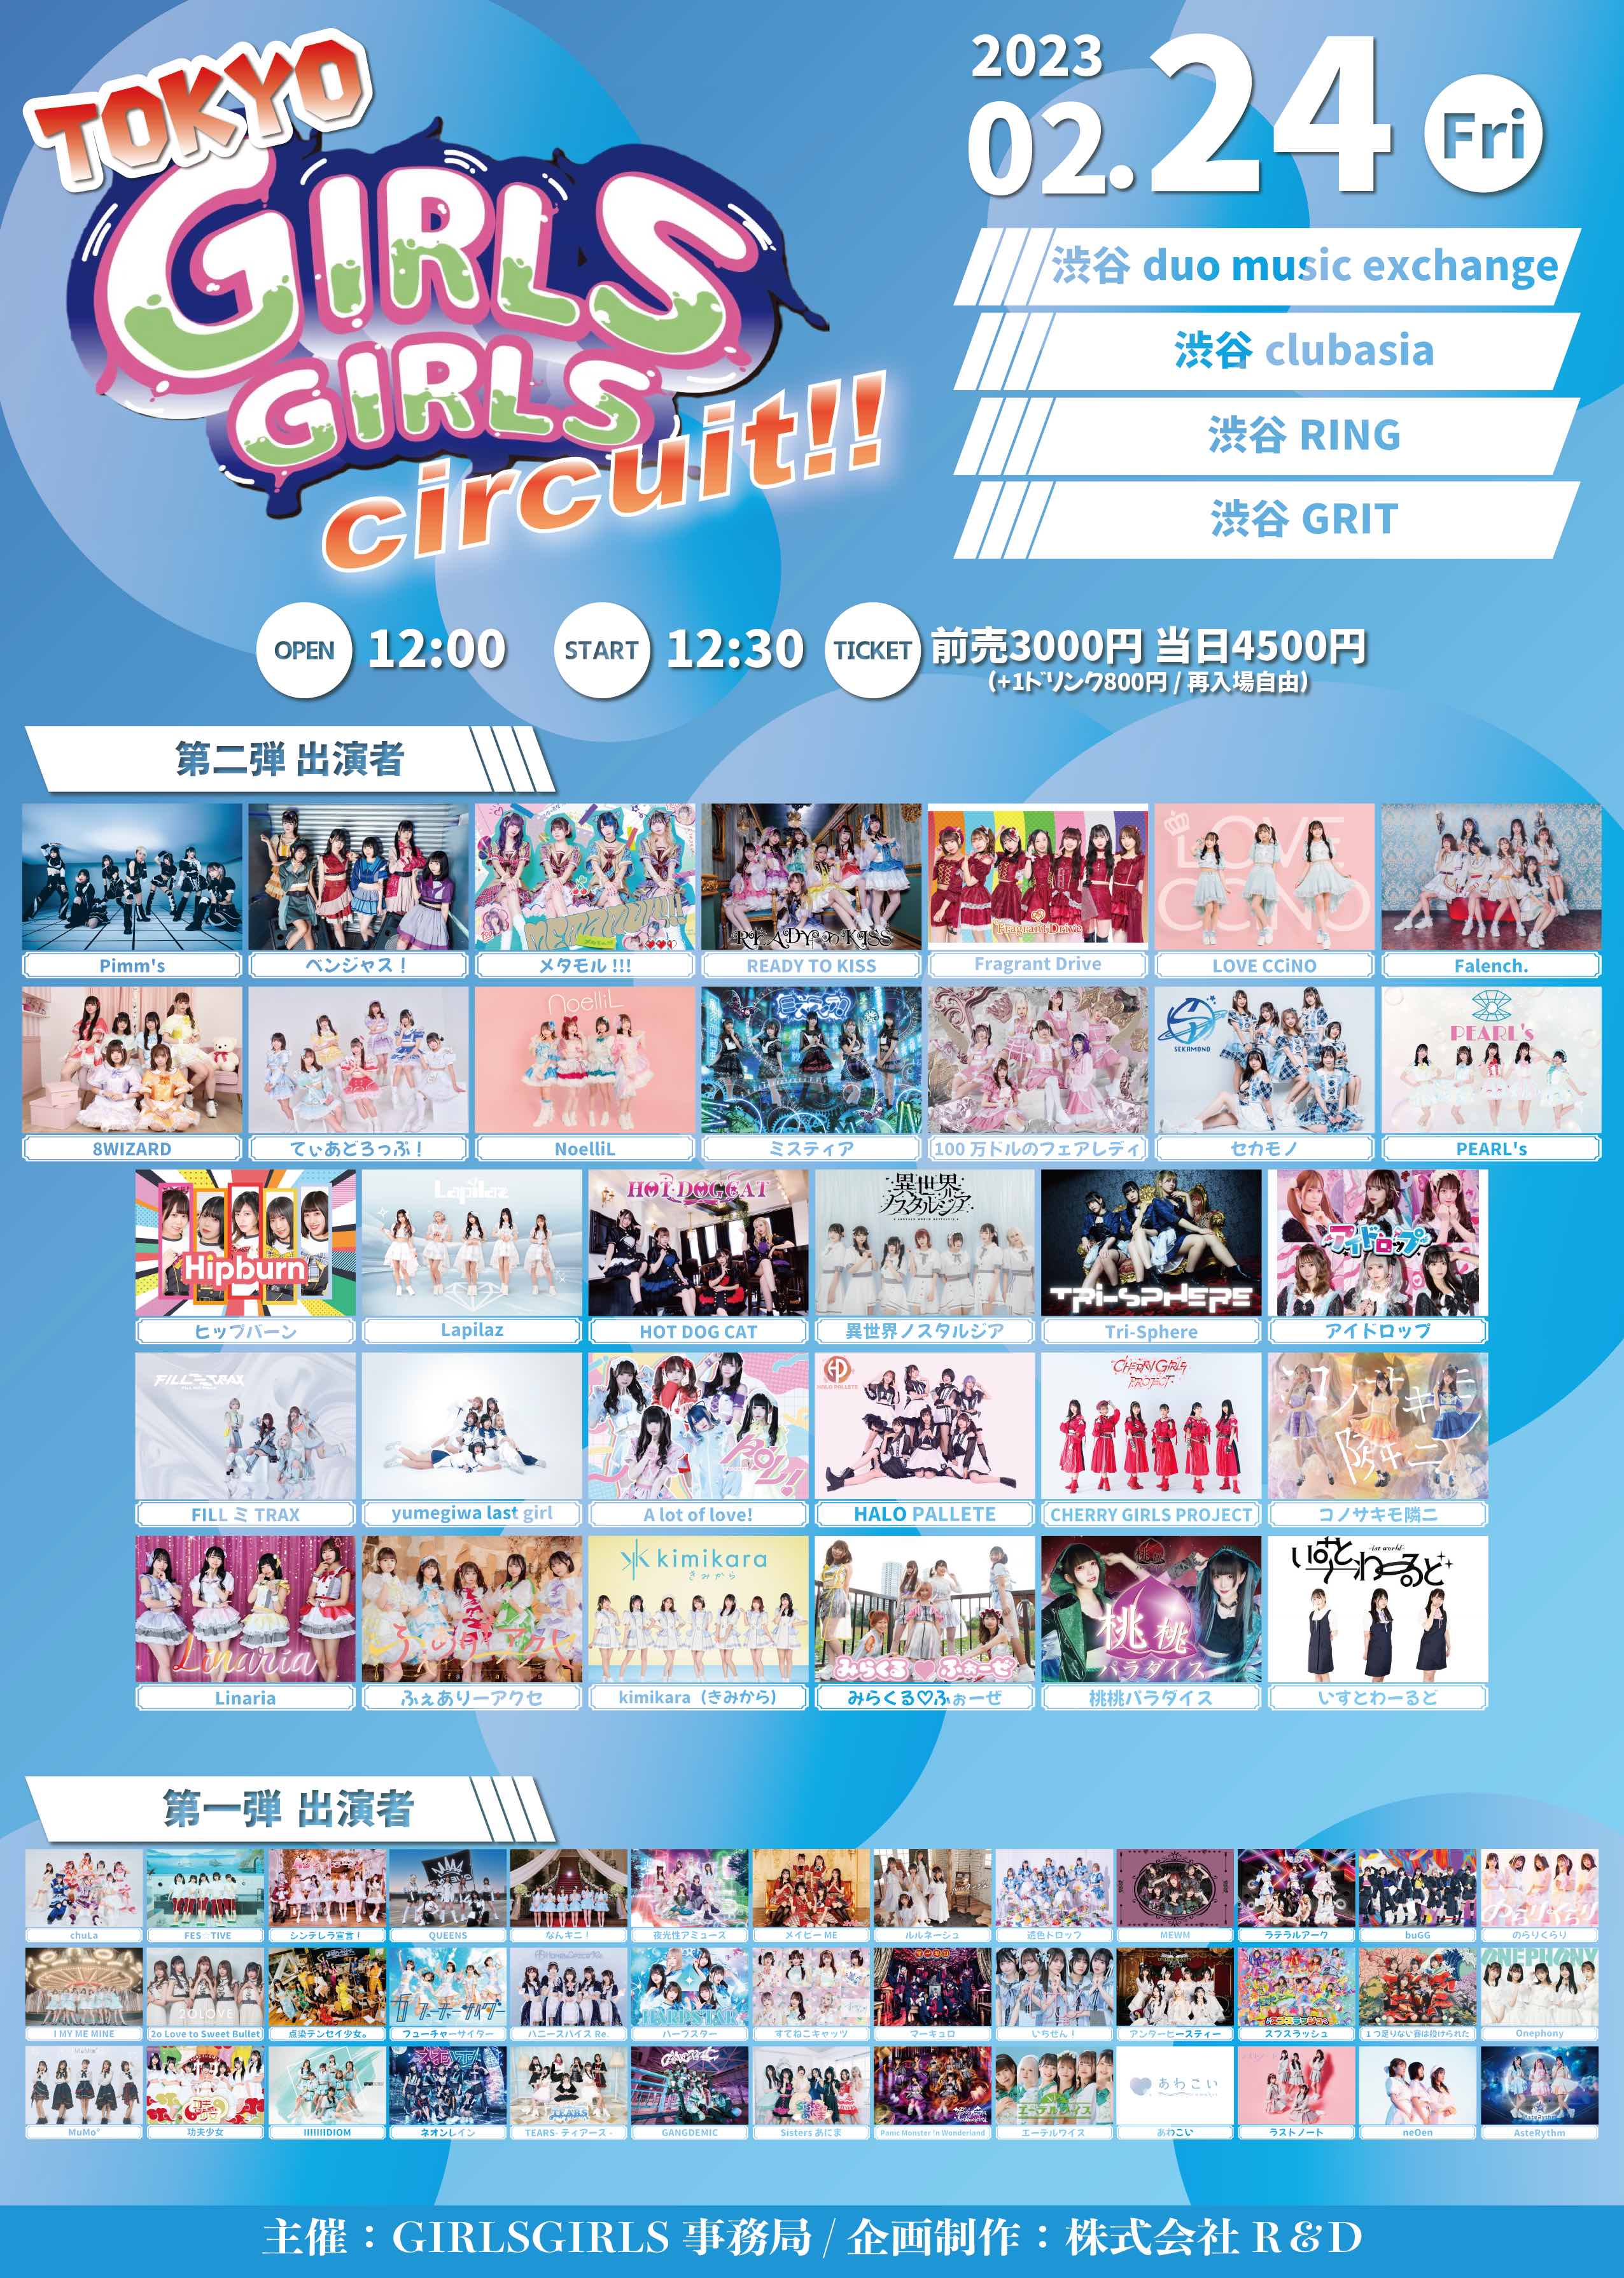 2/24(金) TOKYO GIRLS GIRLS circuit!!